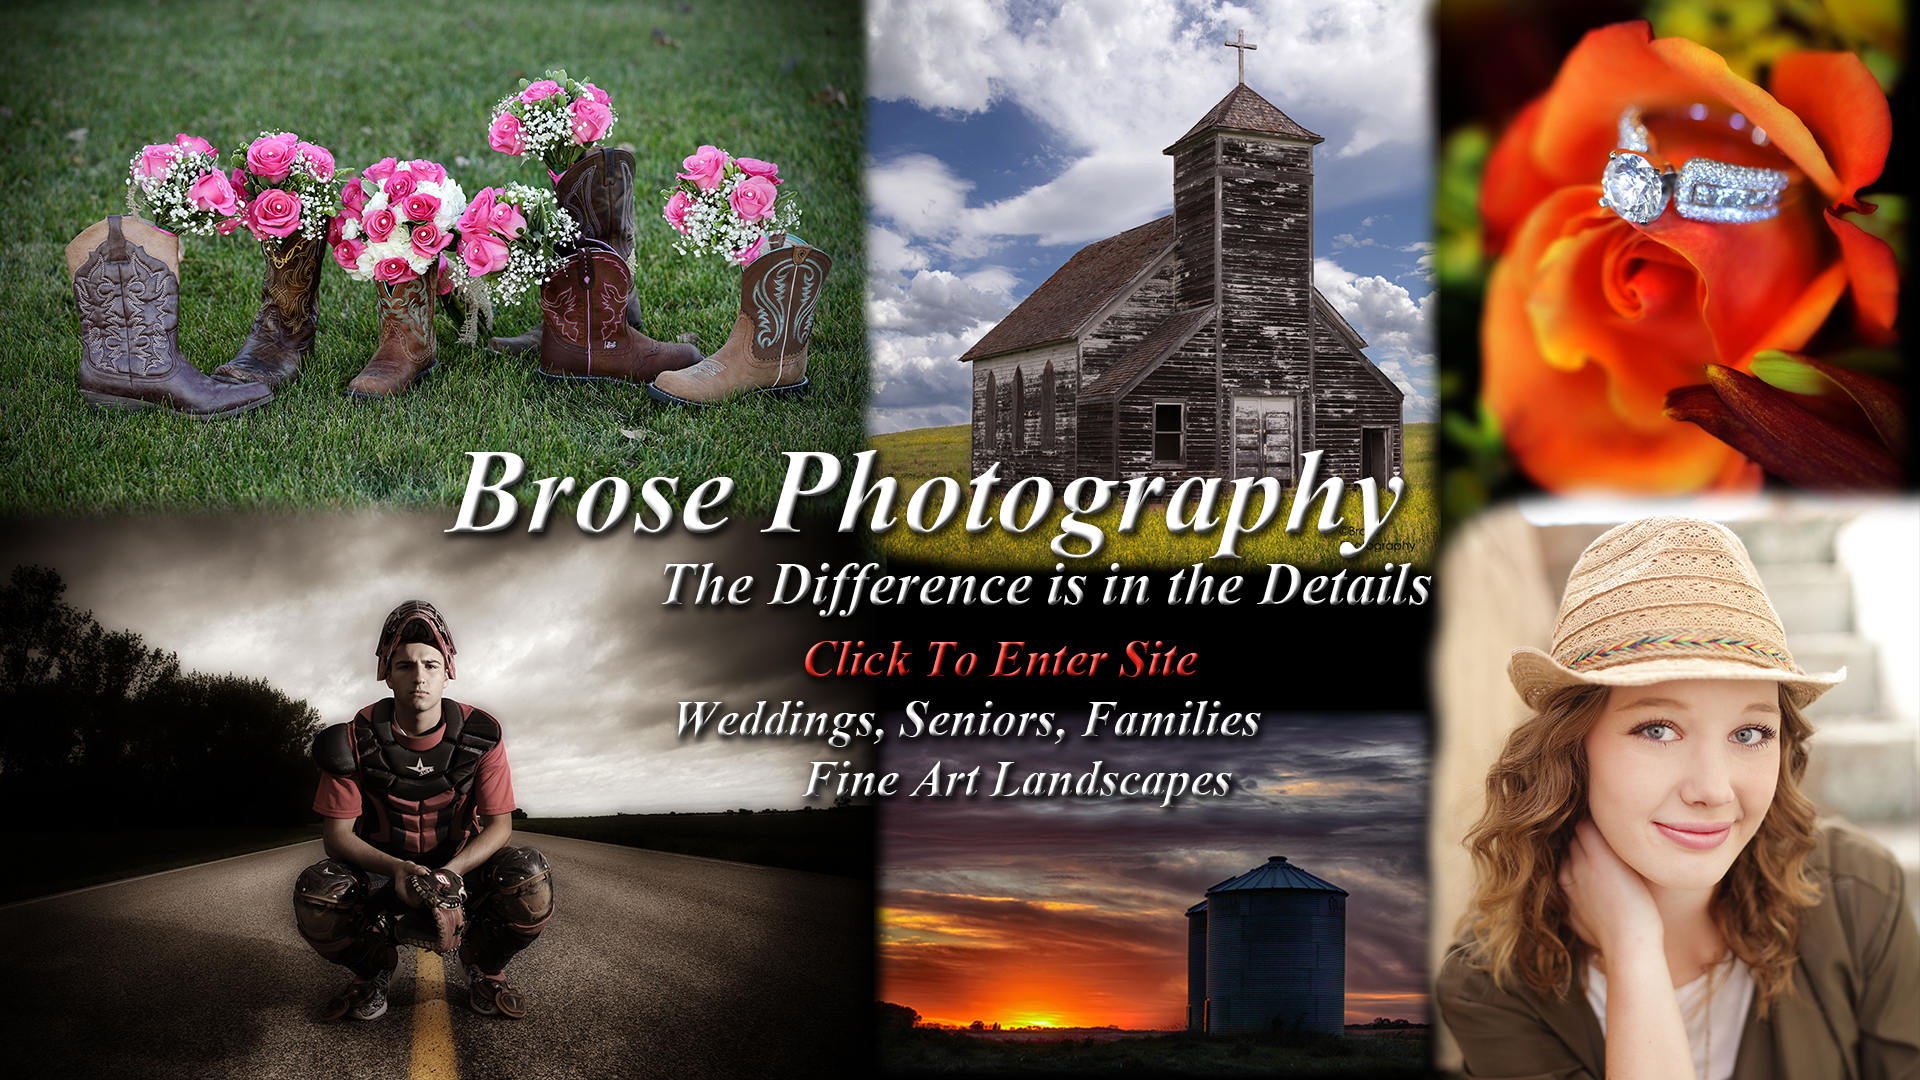 Brose Photography - Enter